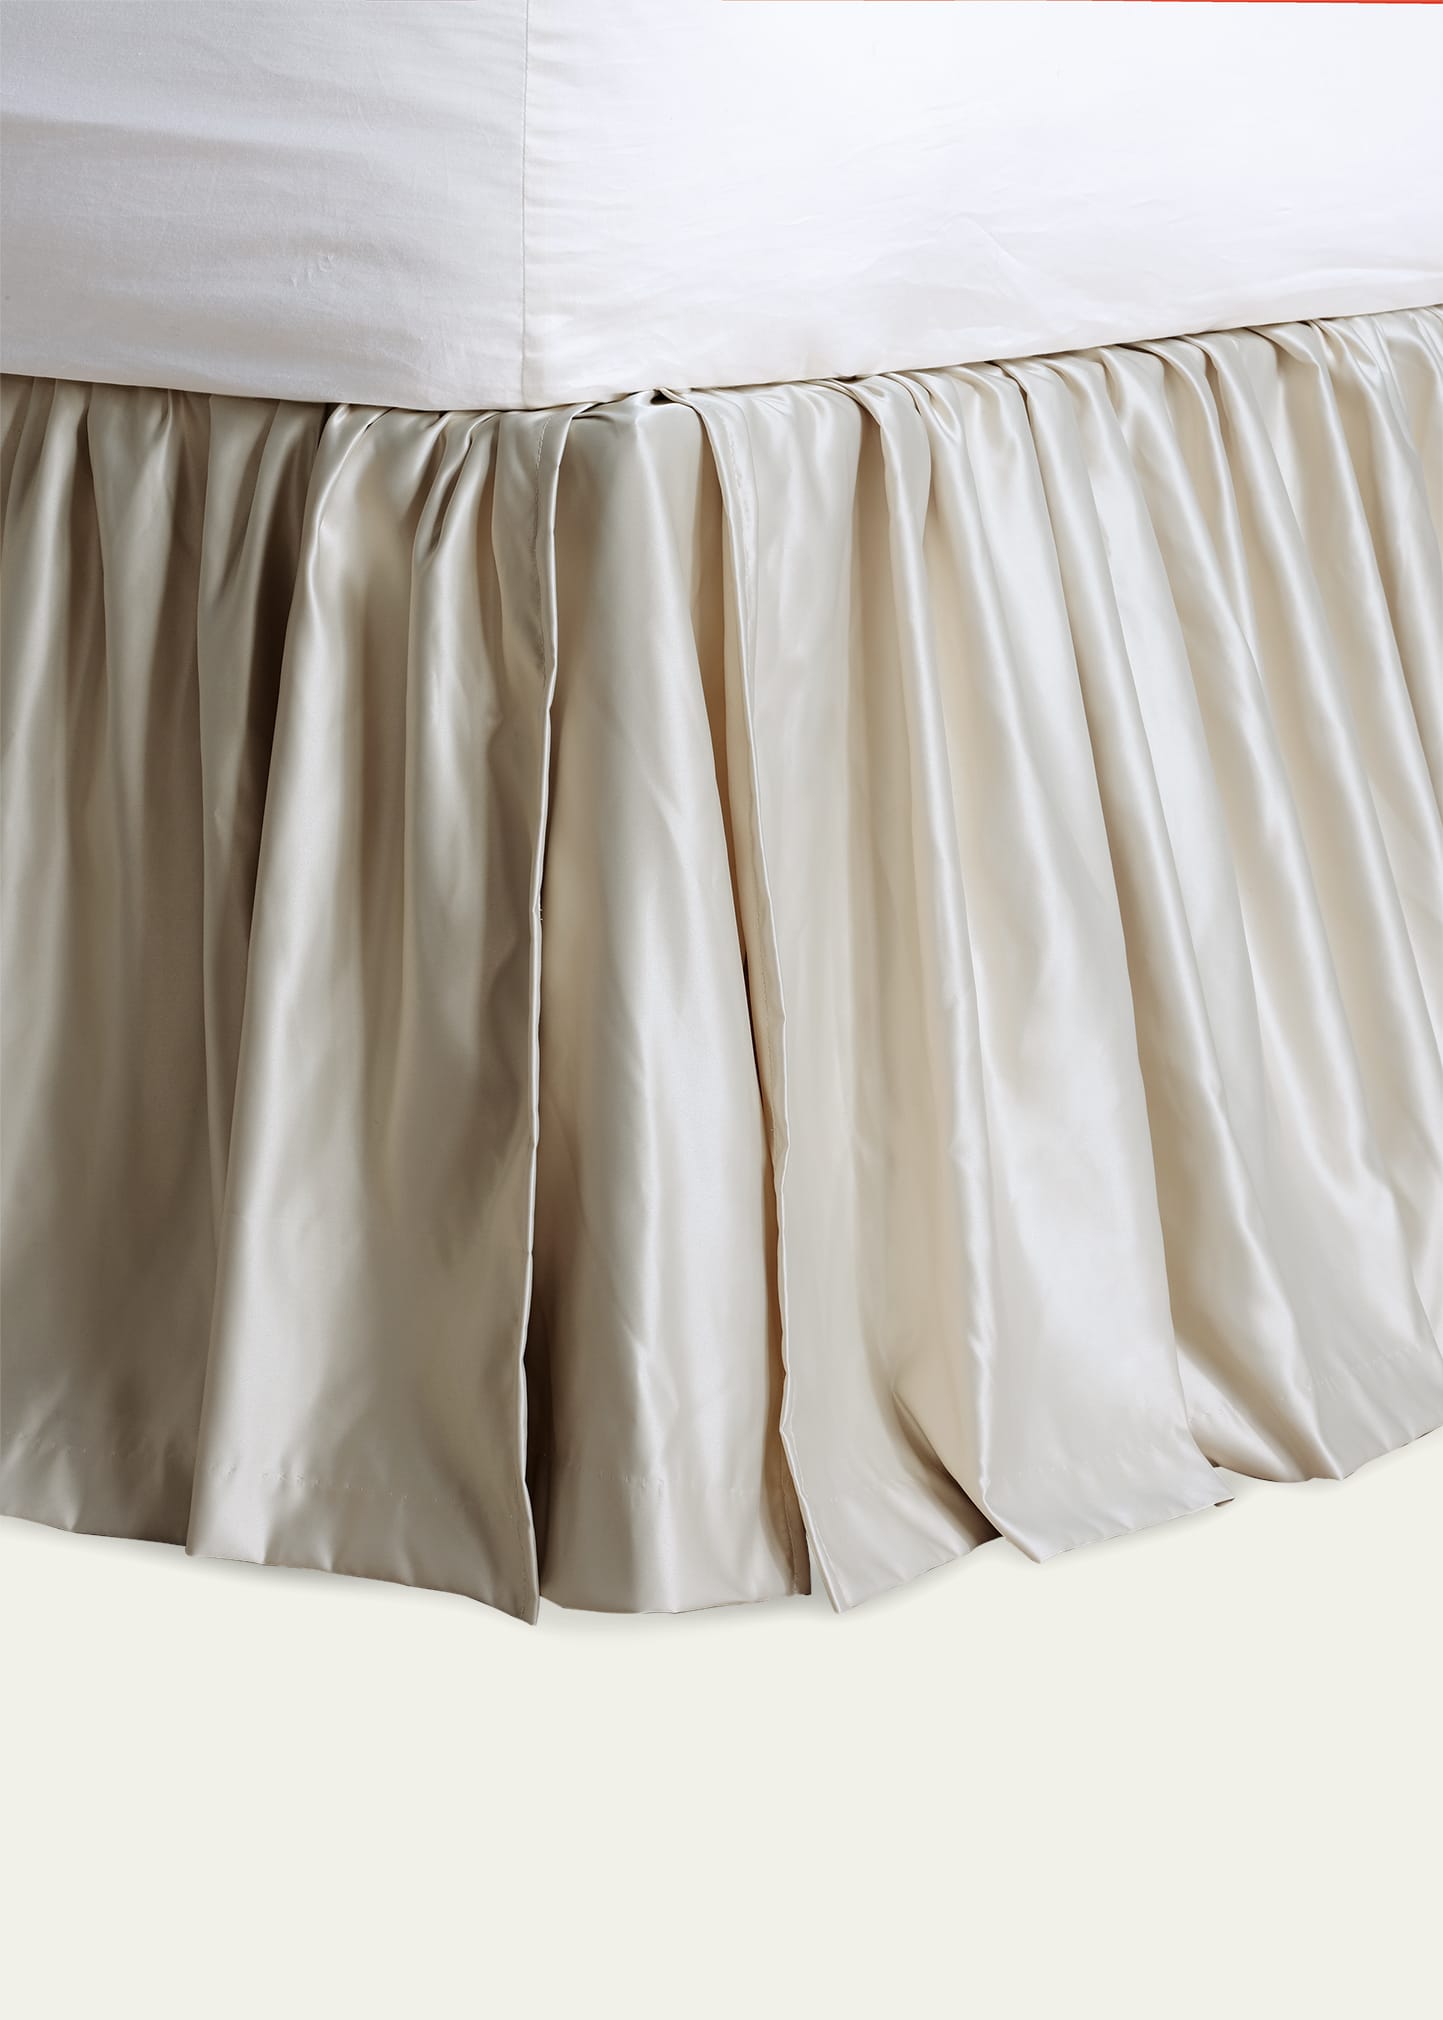 Eastern Accents Jolene Queen Bed Skirt In Neutral